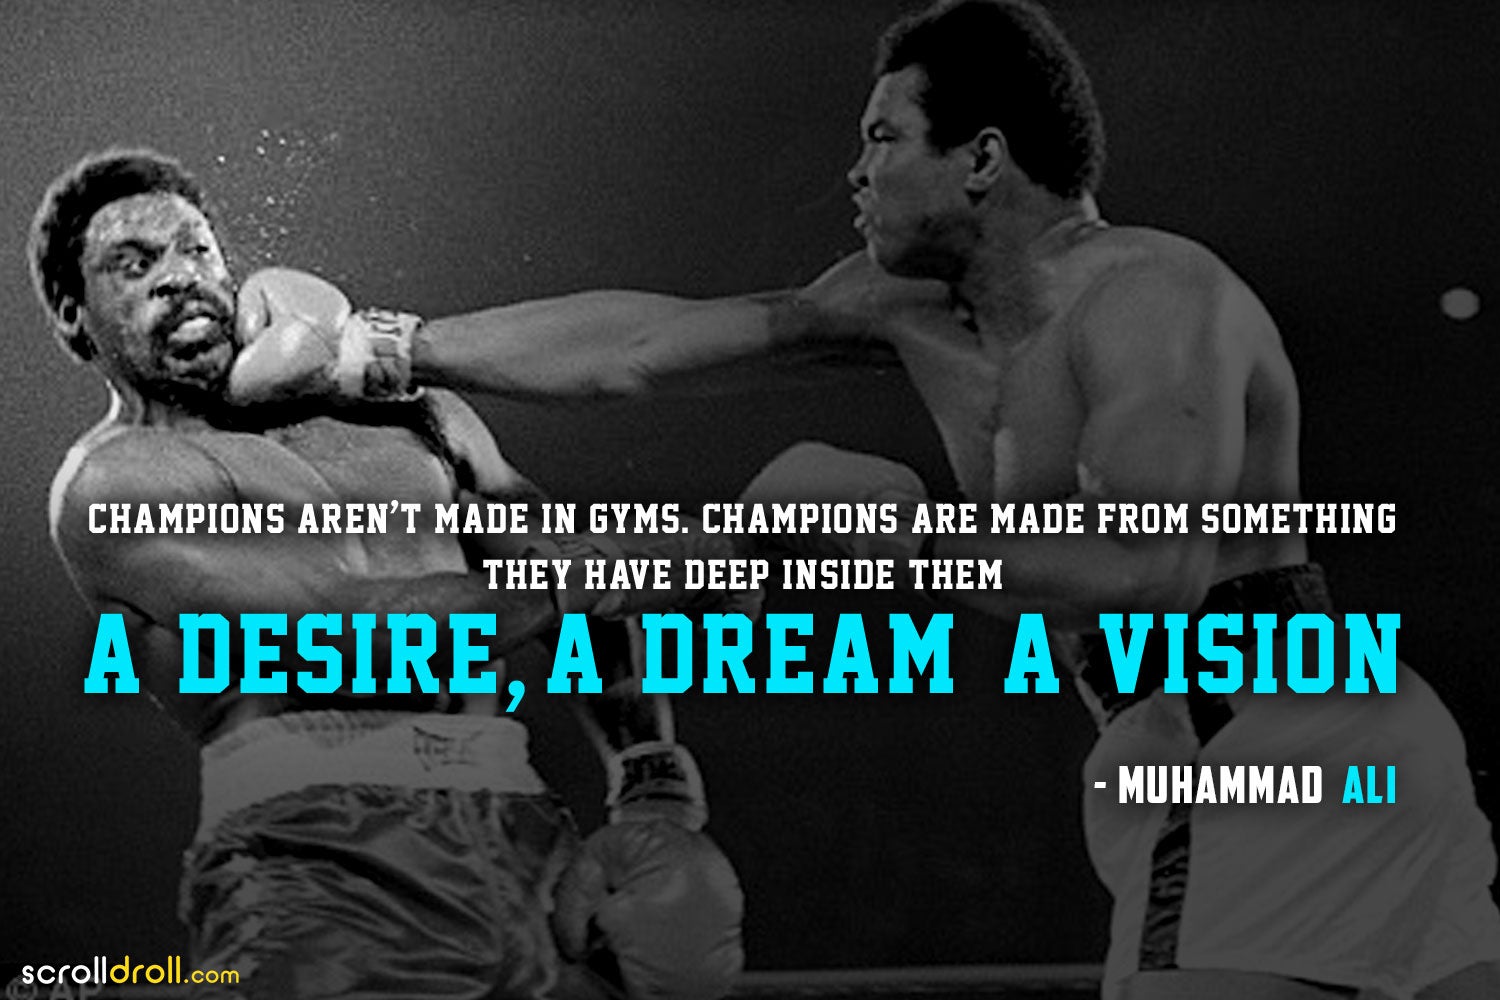 muhammad ali quotes boxing